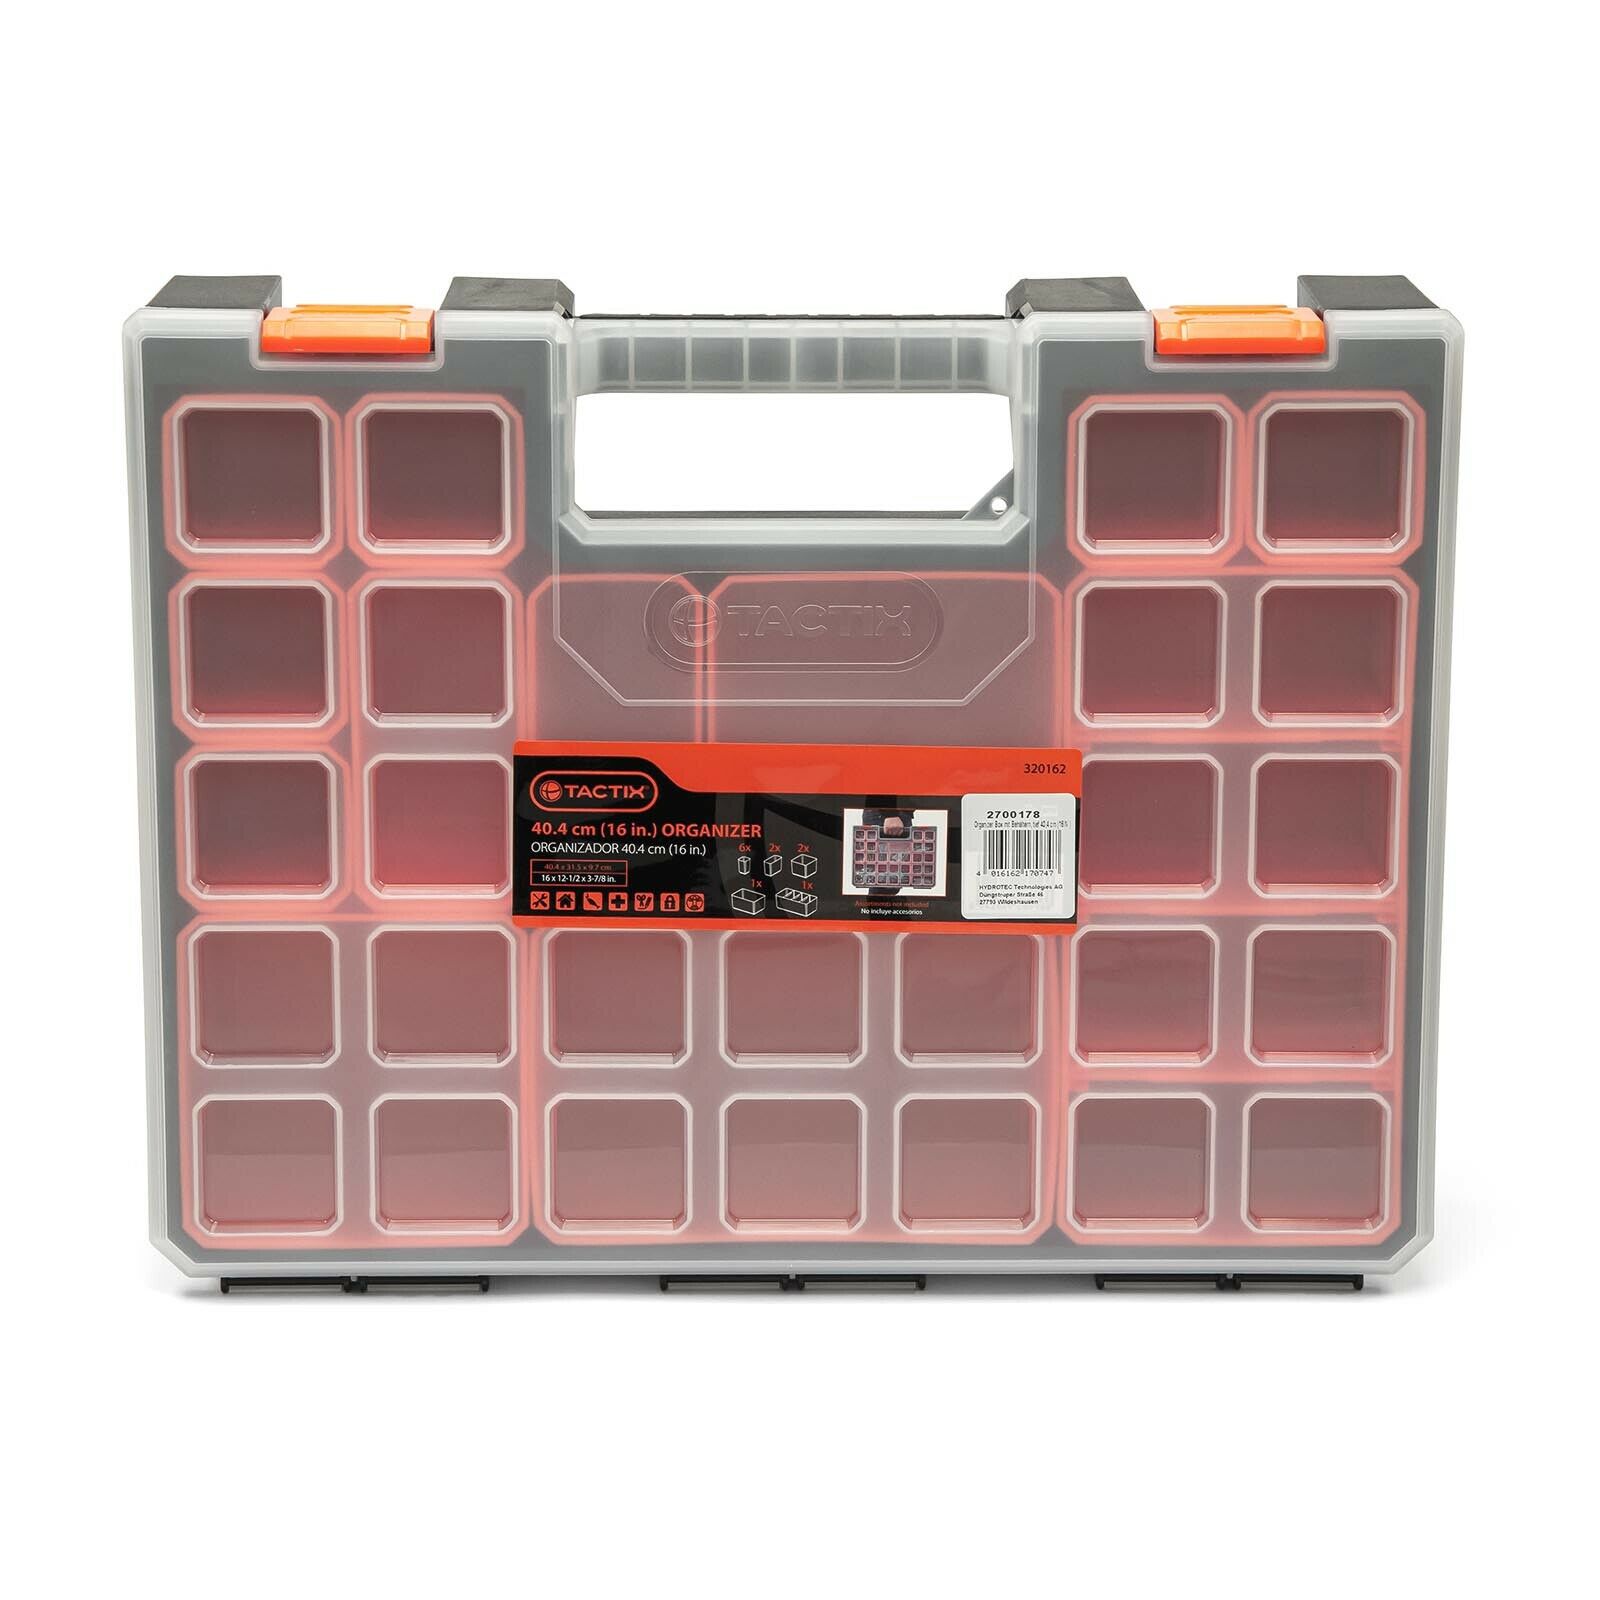 TACTIX Sortimentskoffer mit entnehmbaren Behältern - tief 40,4 cm